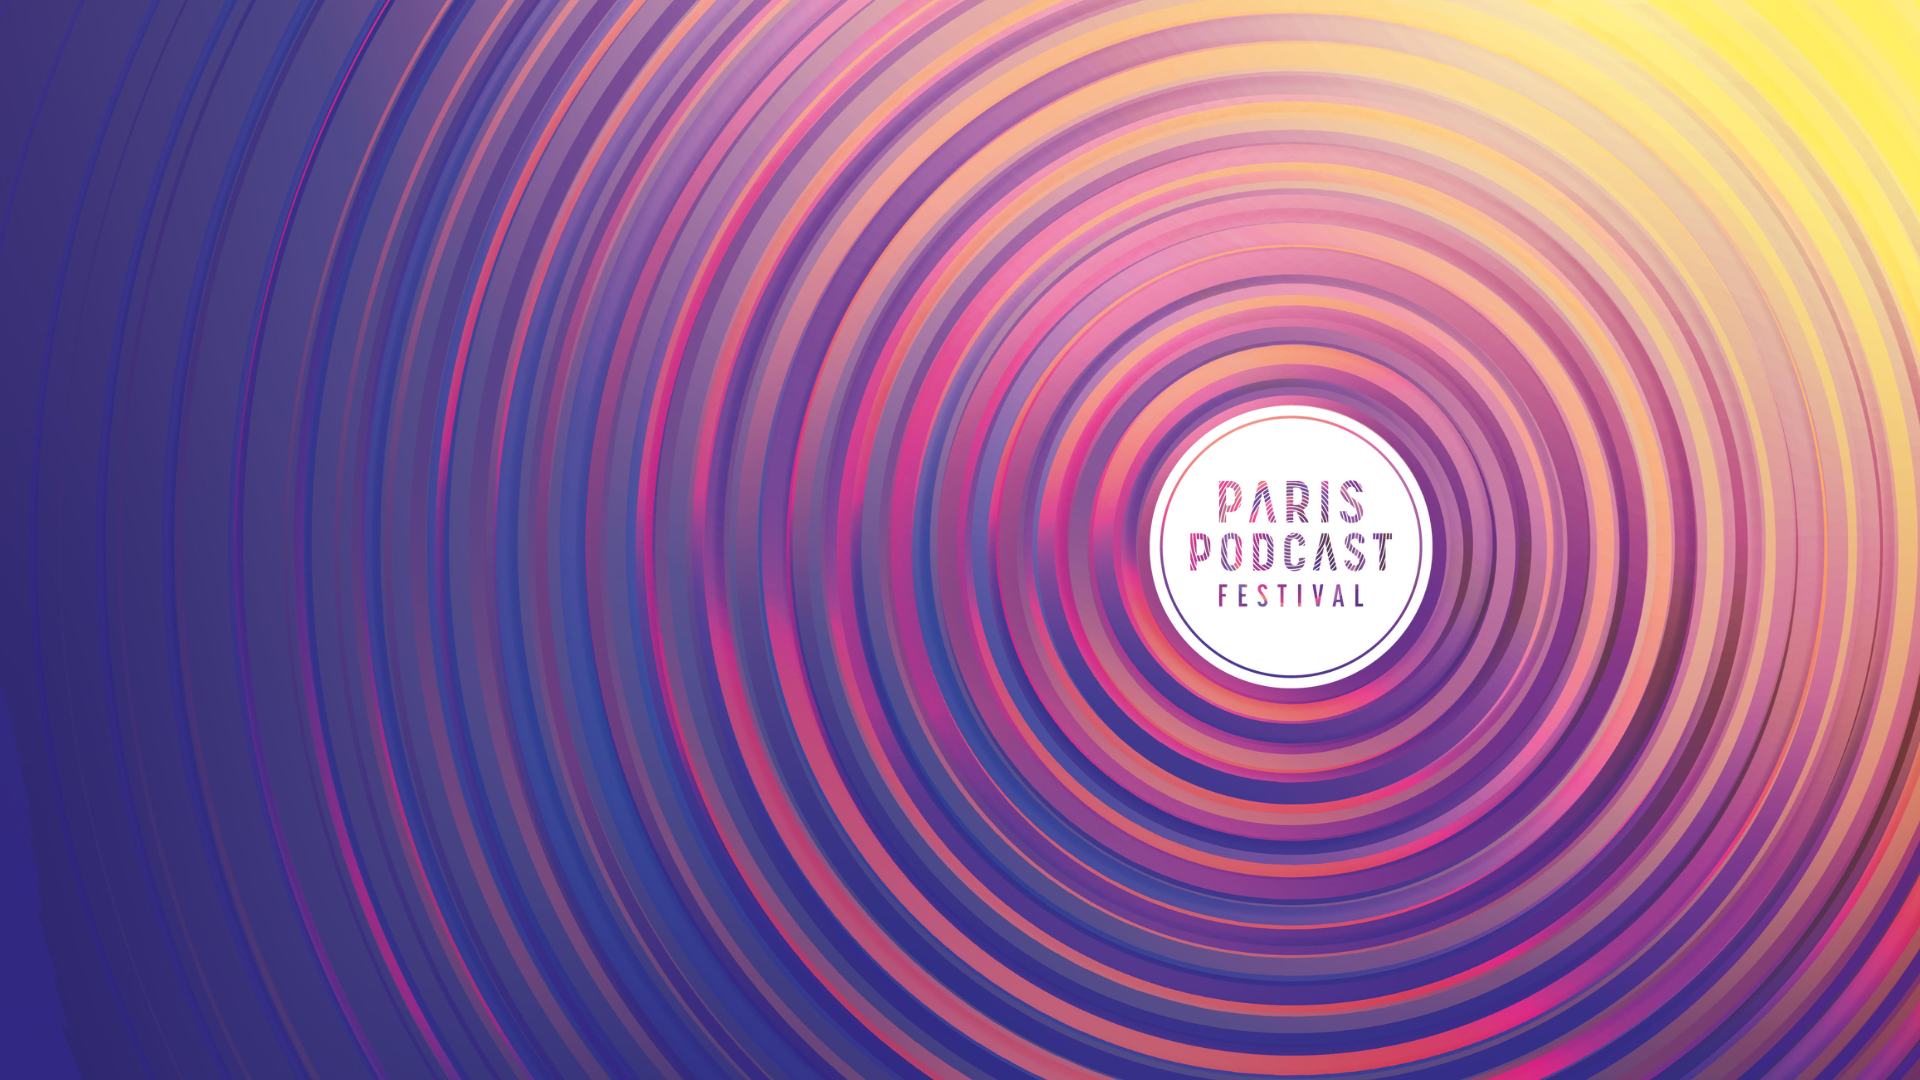 Cérémonie de clôture du Paris Podcast Festival 2020